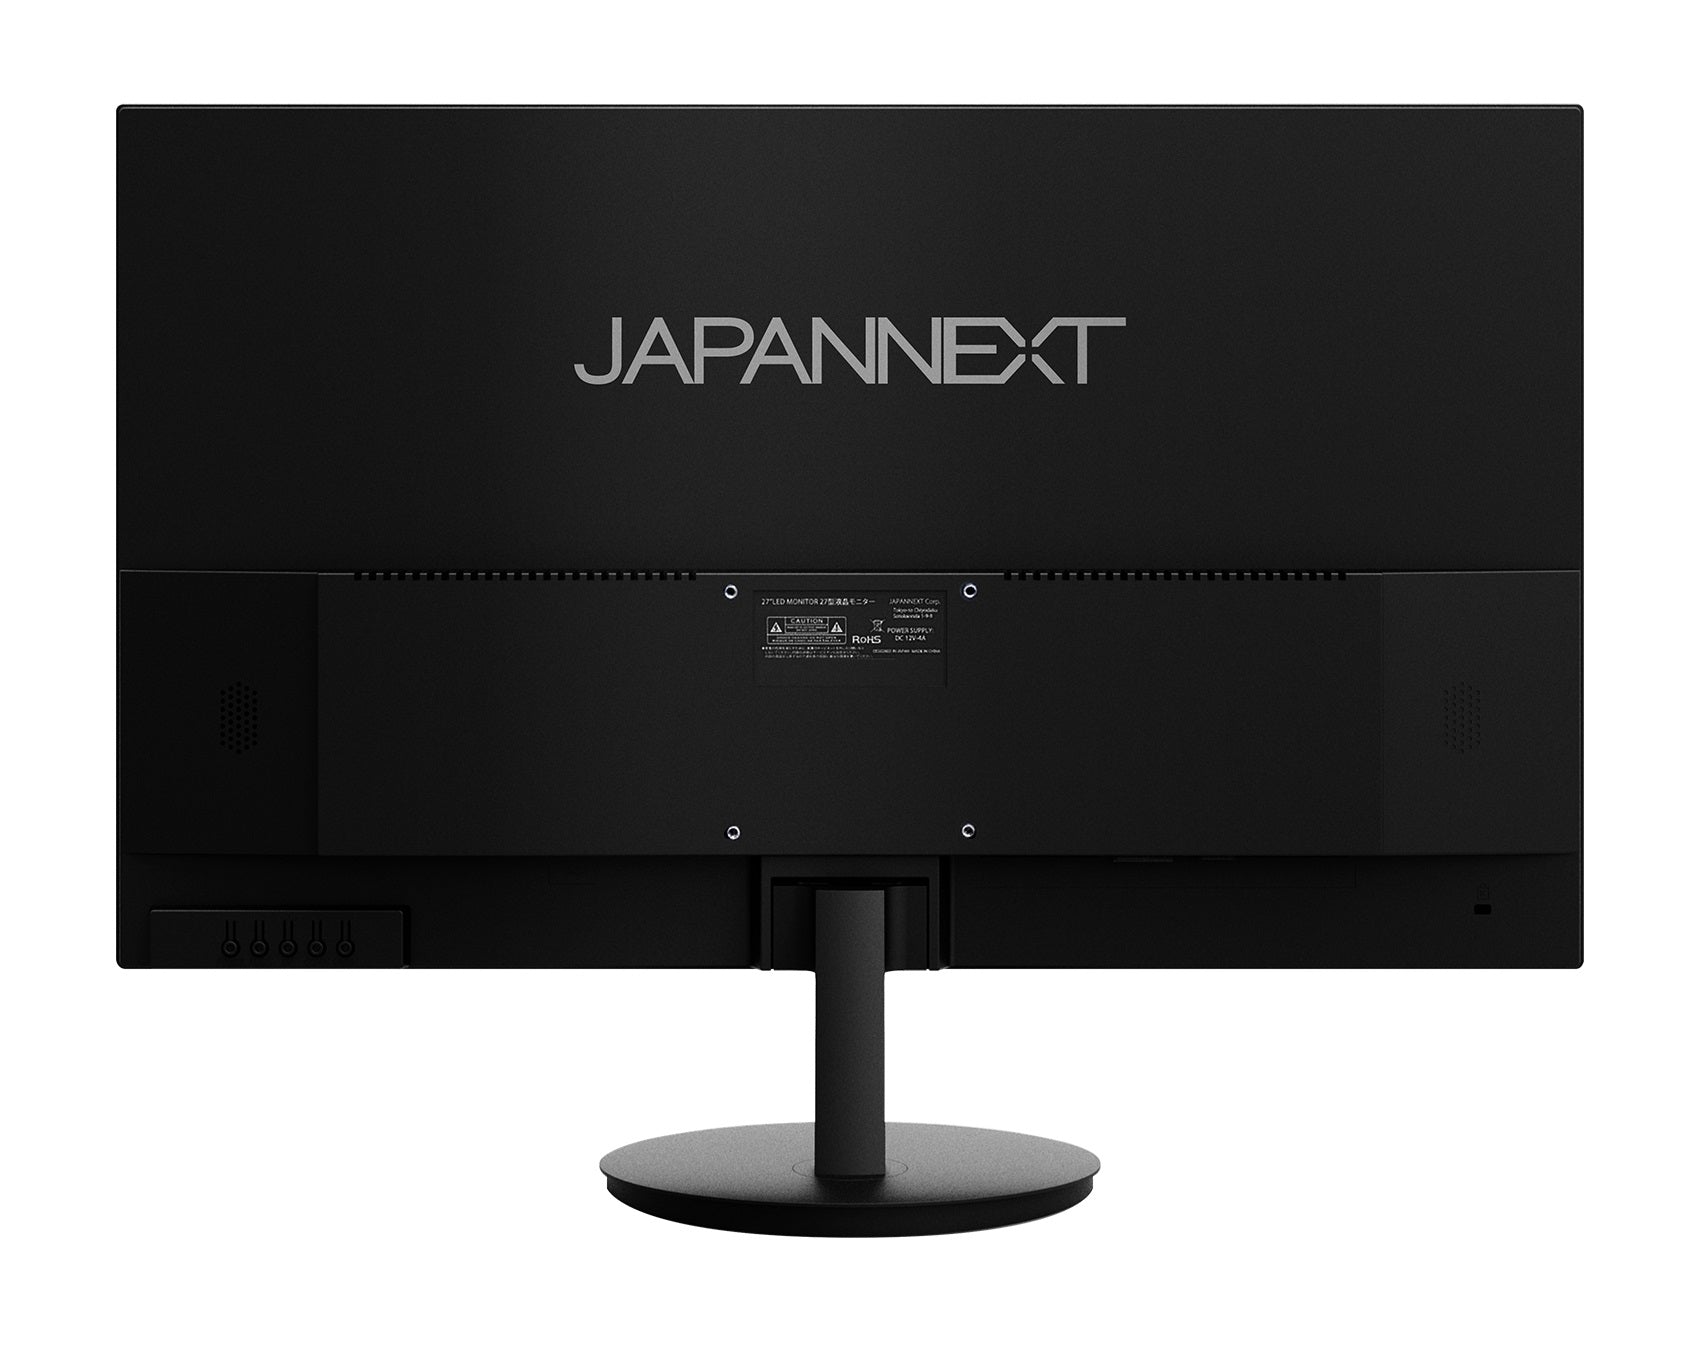 JAPANNEXT 27インチ WQHD(2560 x 1440) 液晶モニター JN-IPS271WQHD-N